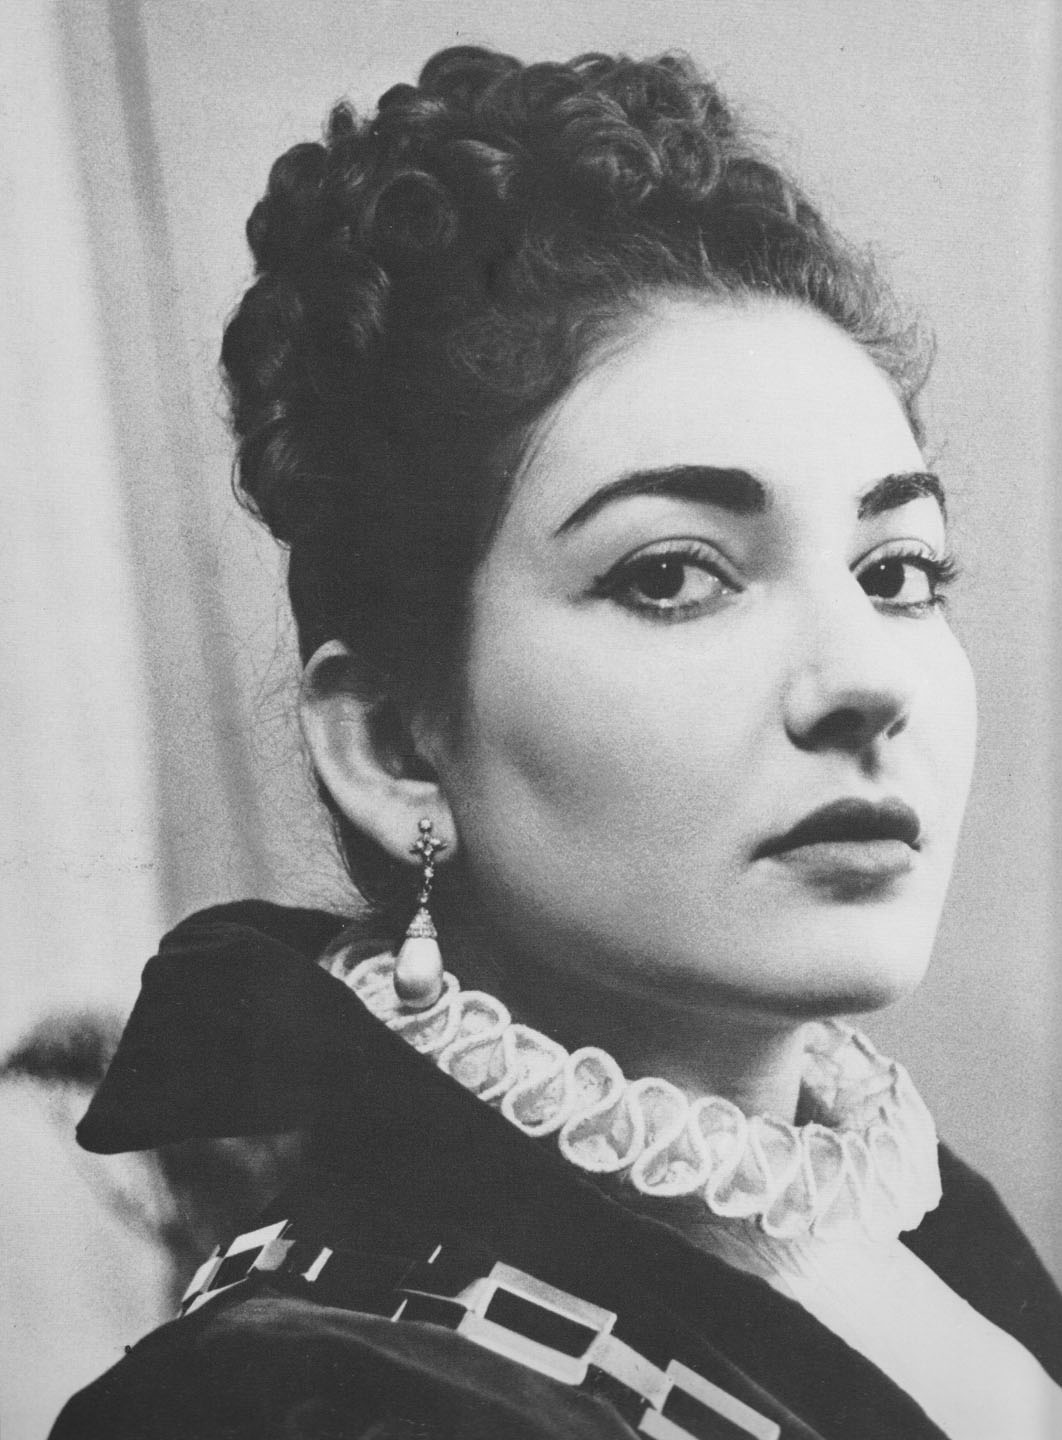 Photographs of Maria Callas live